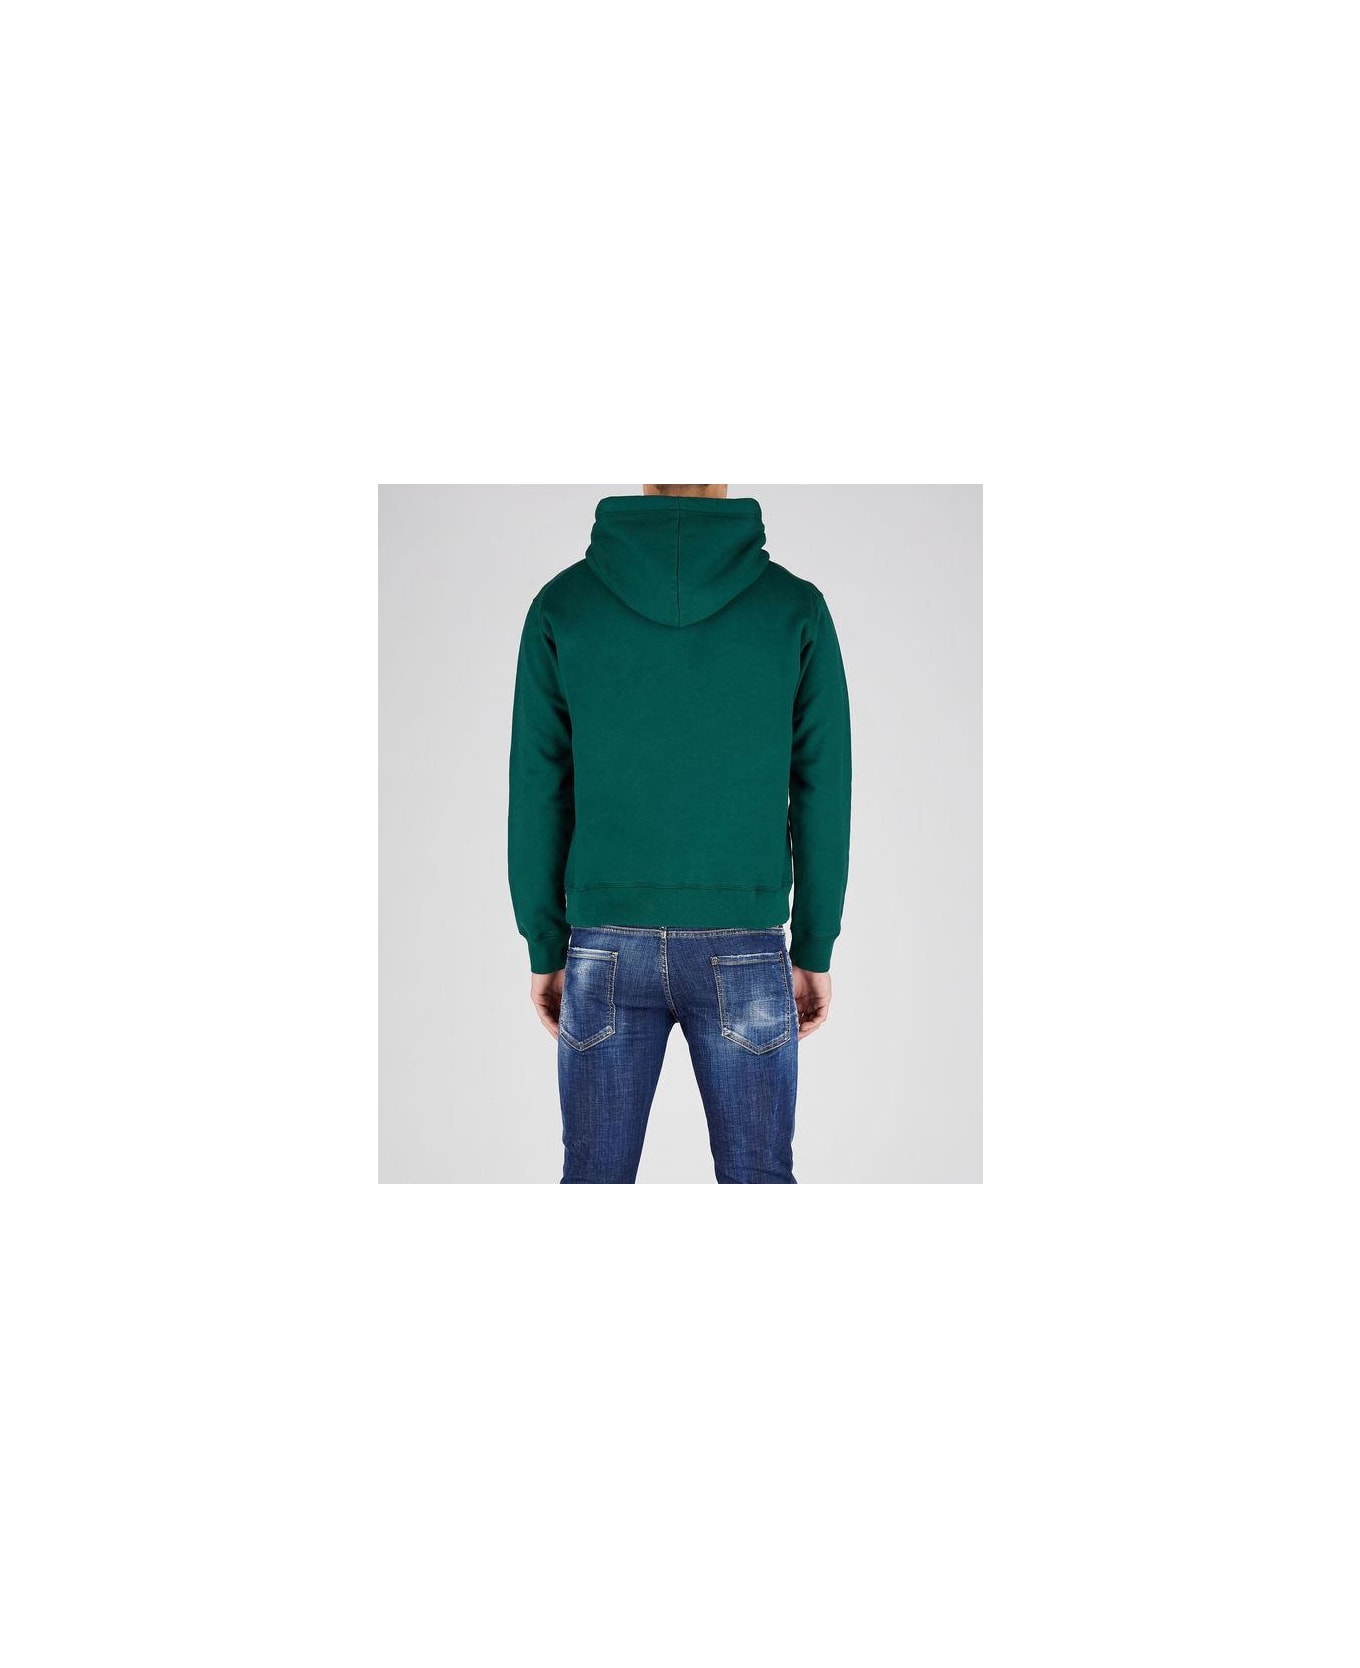 Dsquared2 Sweatshirt - Dark green